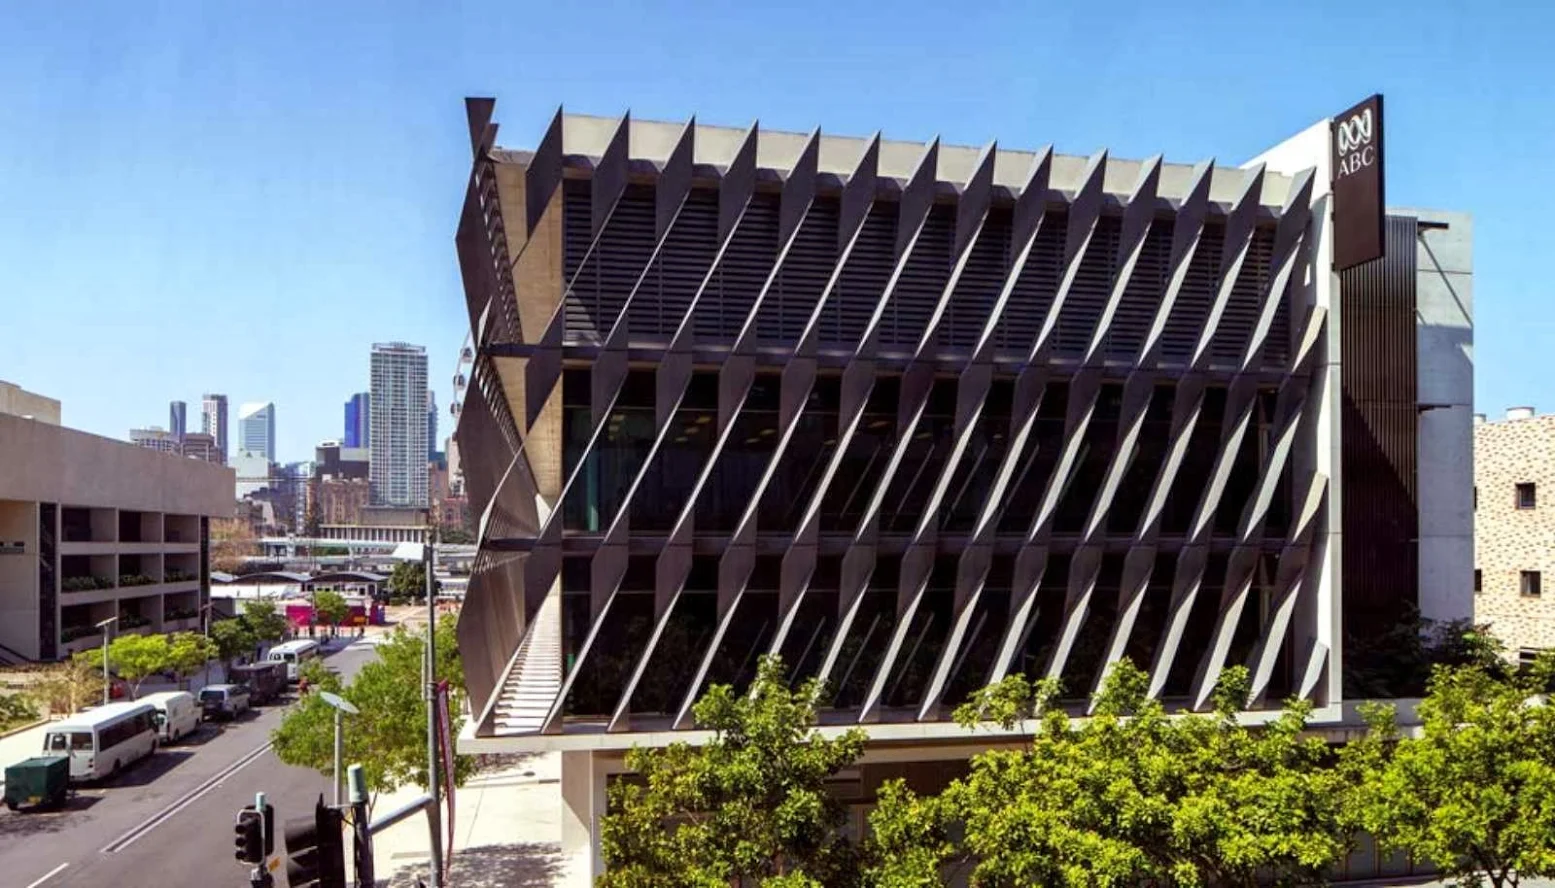 ABC Headquarters by Richard Kirk Architect